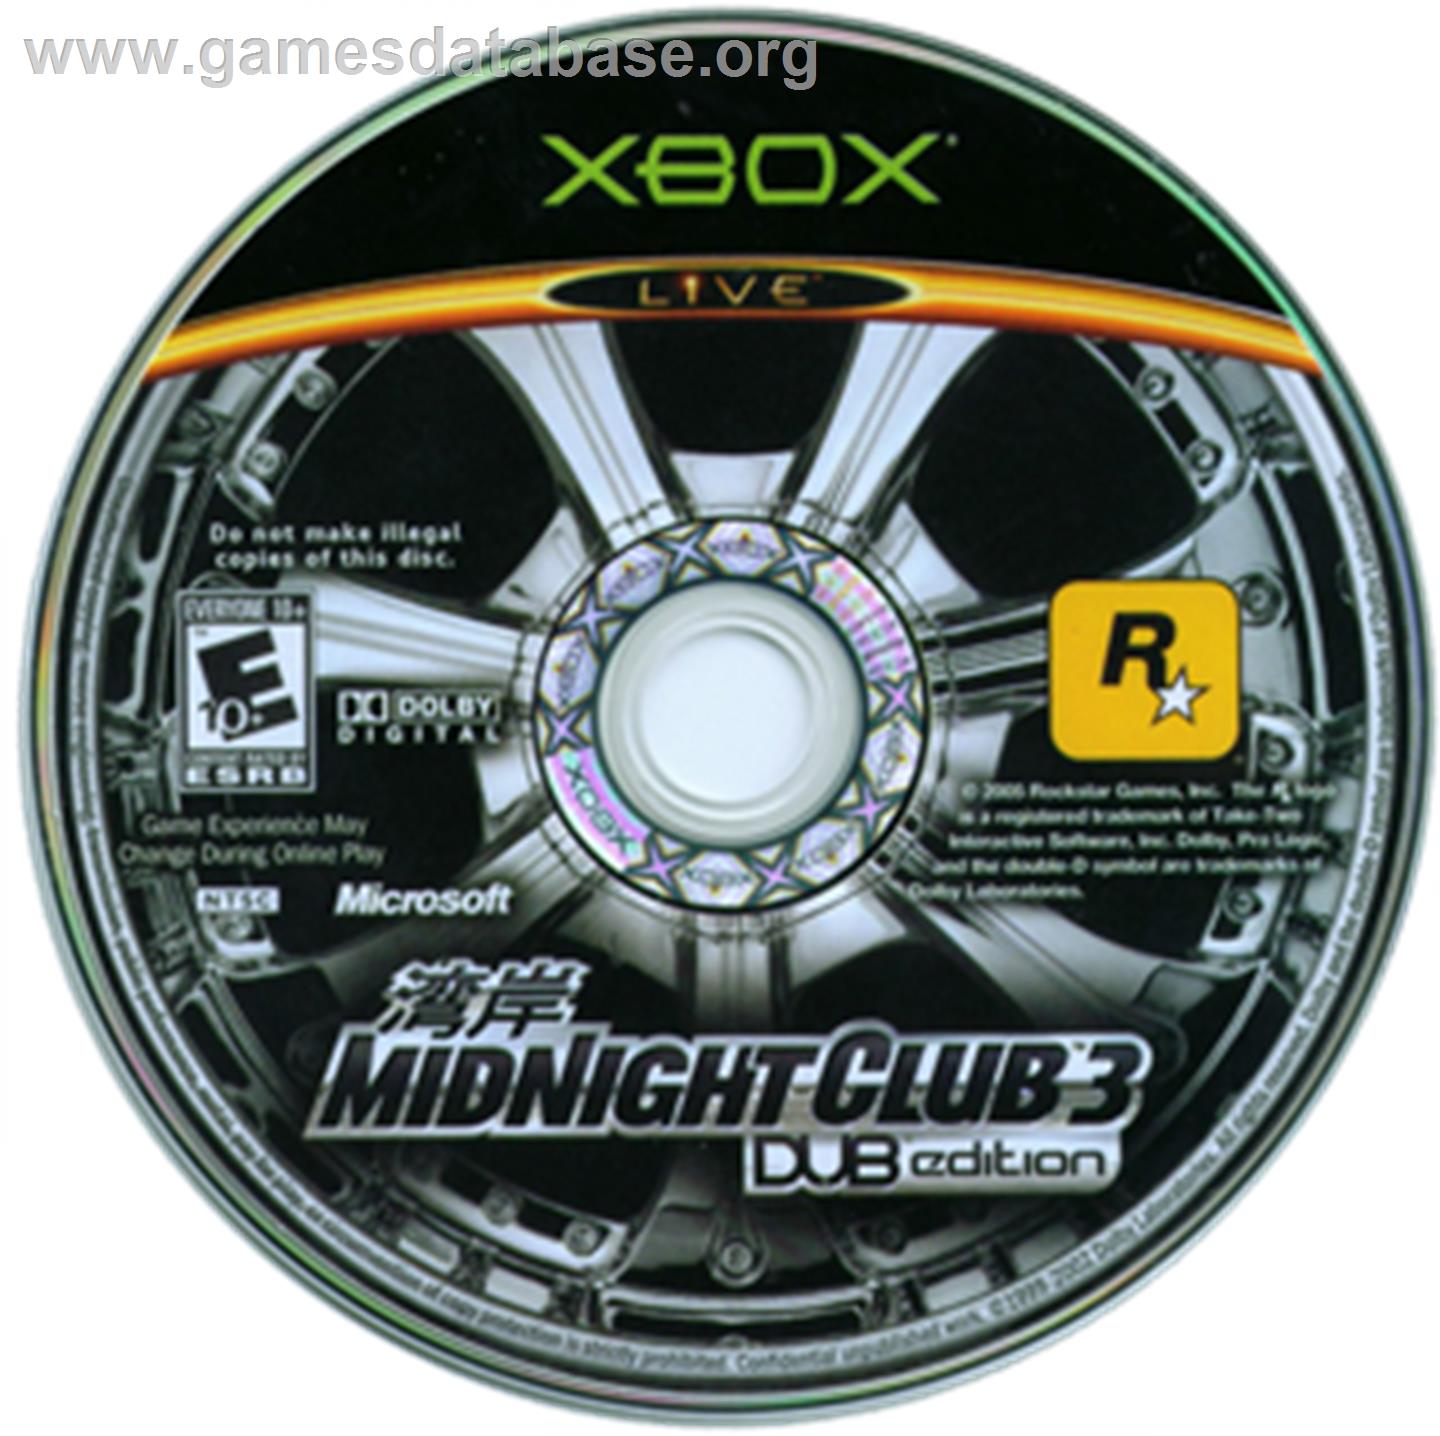 Midnight Club 3: DUB Edition - Microsoft Xbox - Artwork - CD